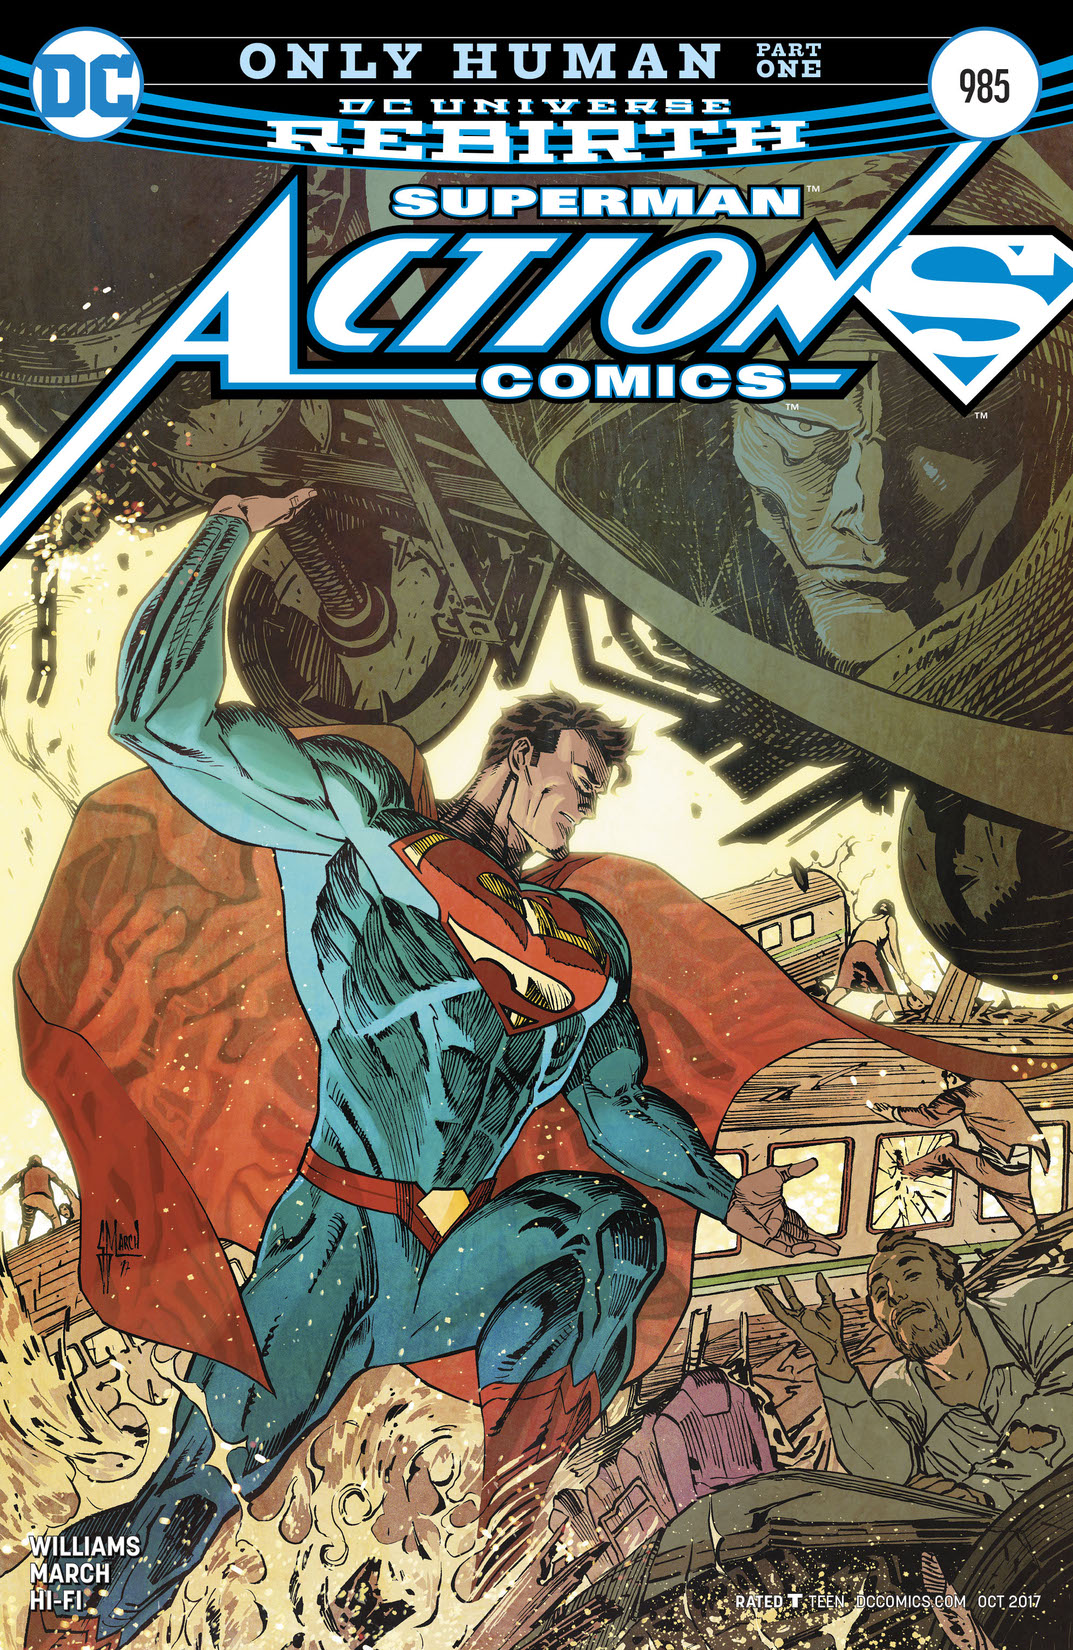 Action Comics (2016-) #985 preview images